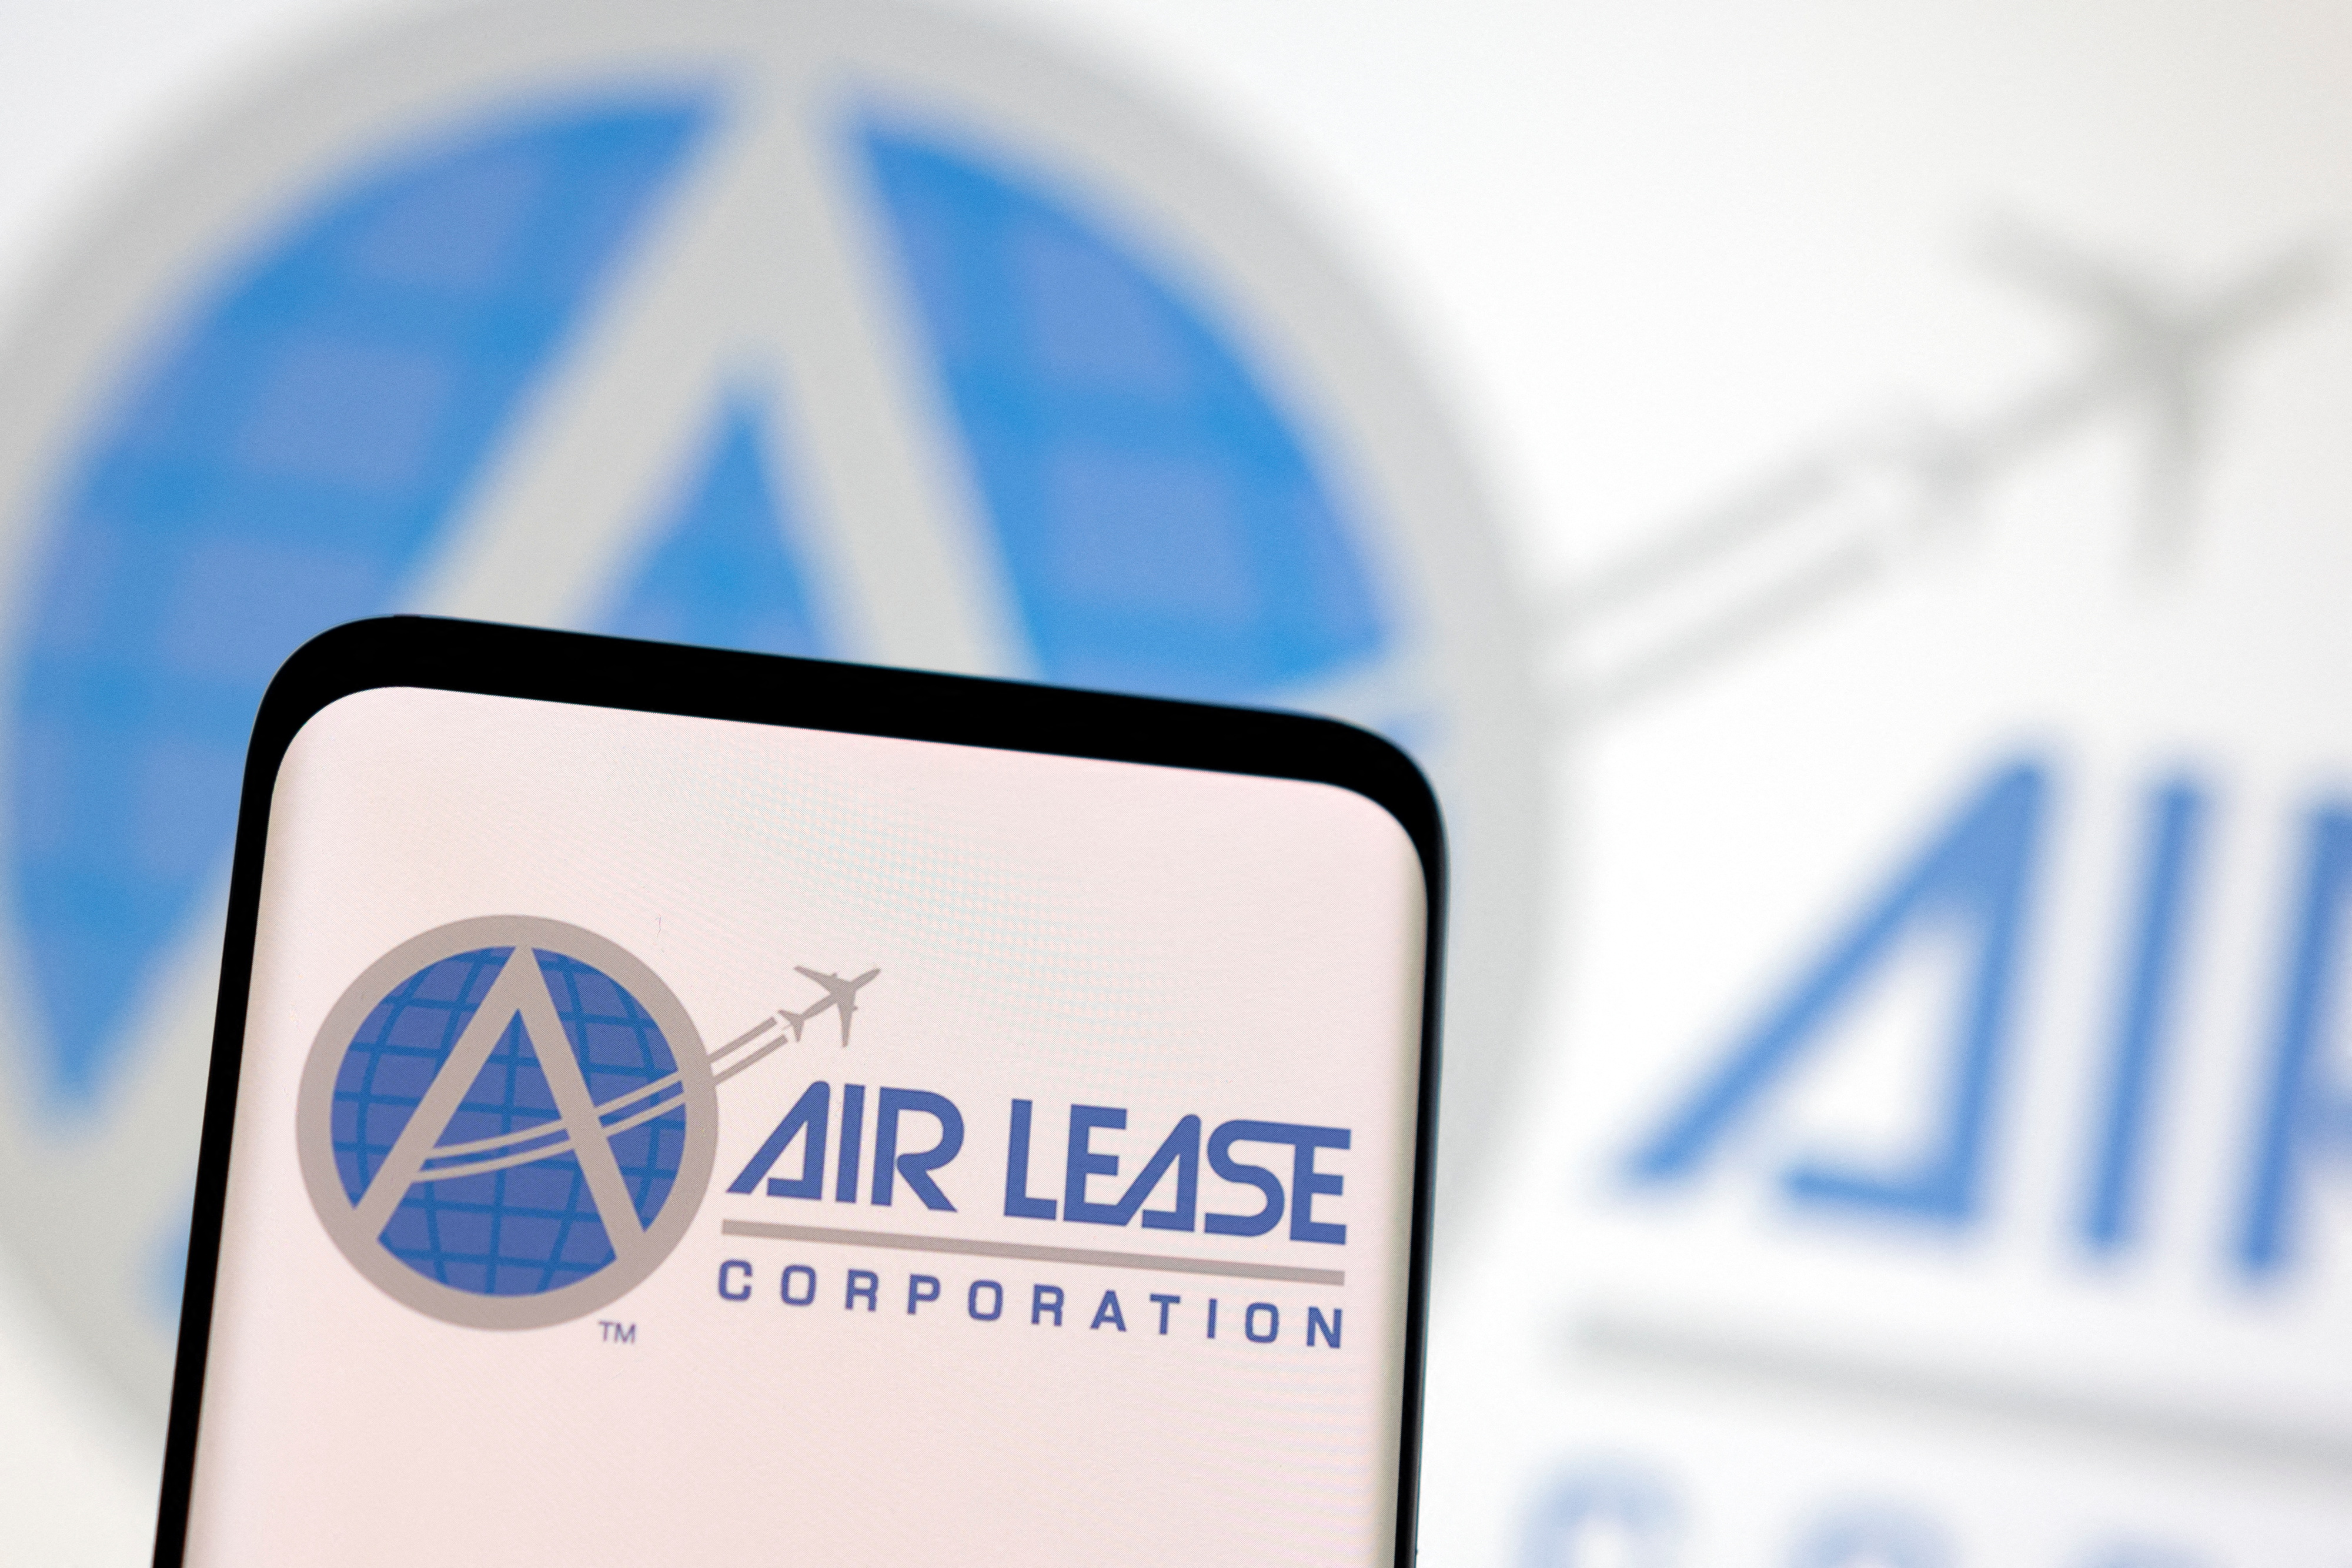 Illustration shows Air Lease logo